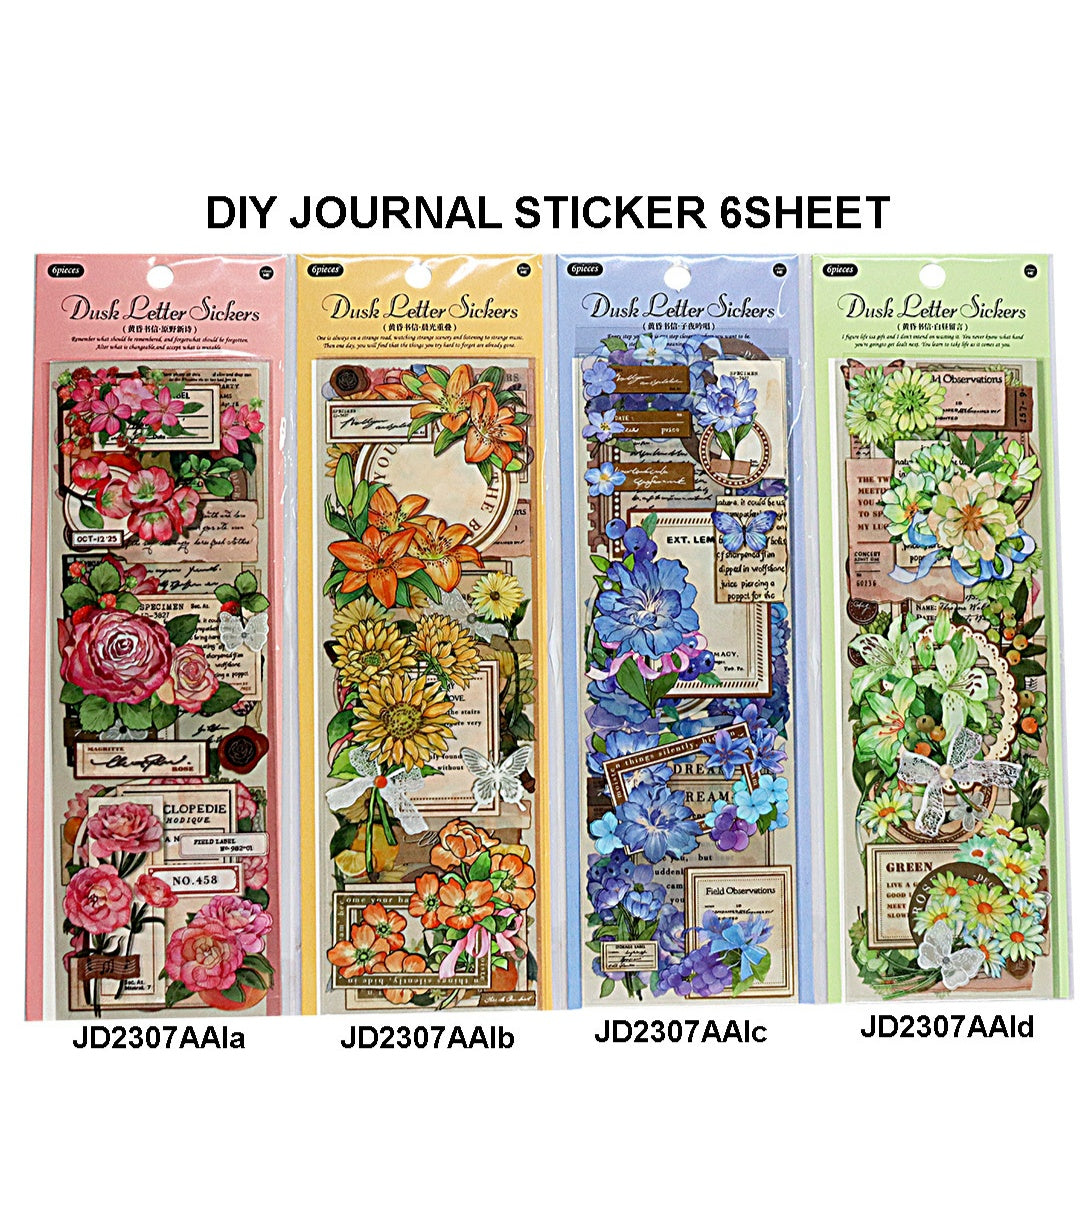 Diy Journal Sticker 6Sheet 247 Jd2307Aai | INKARTO